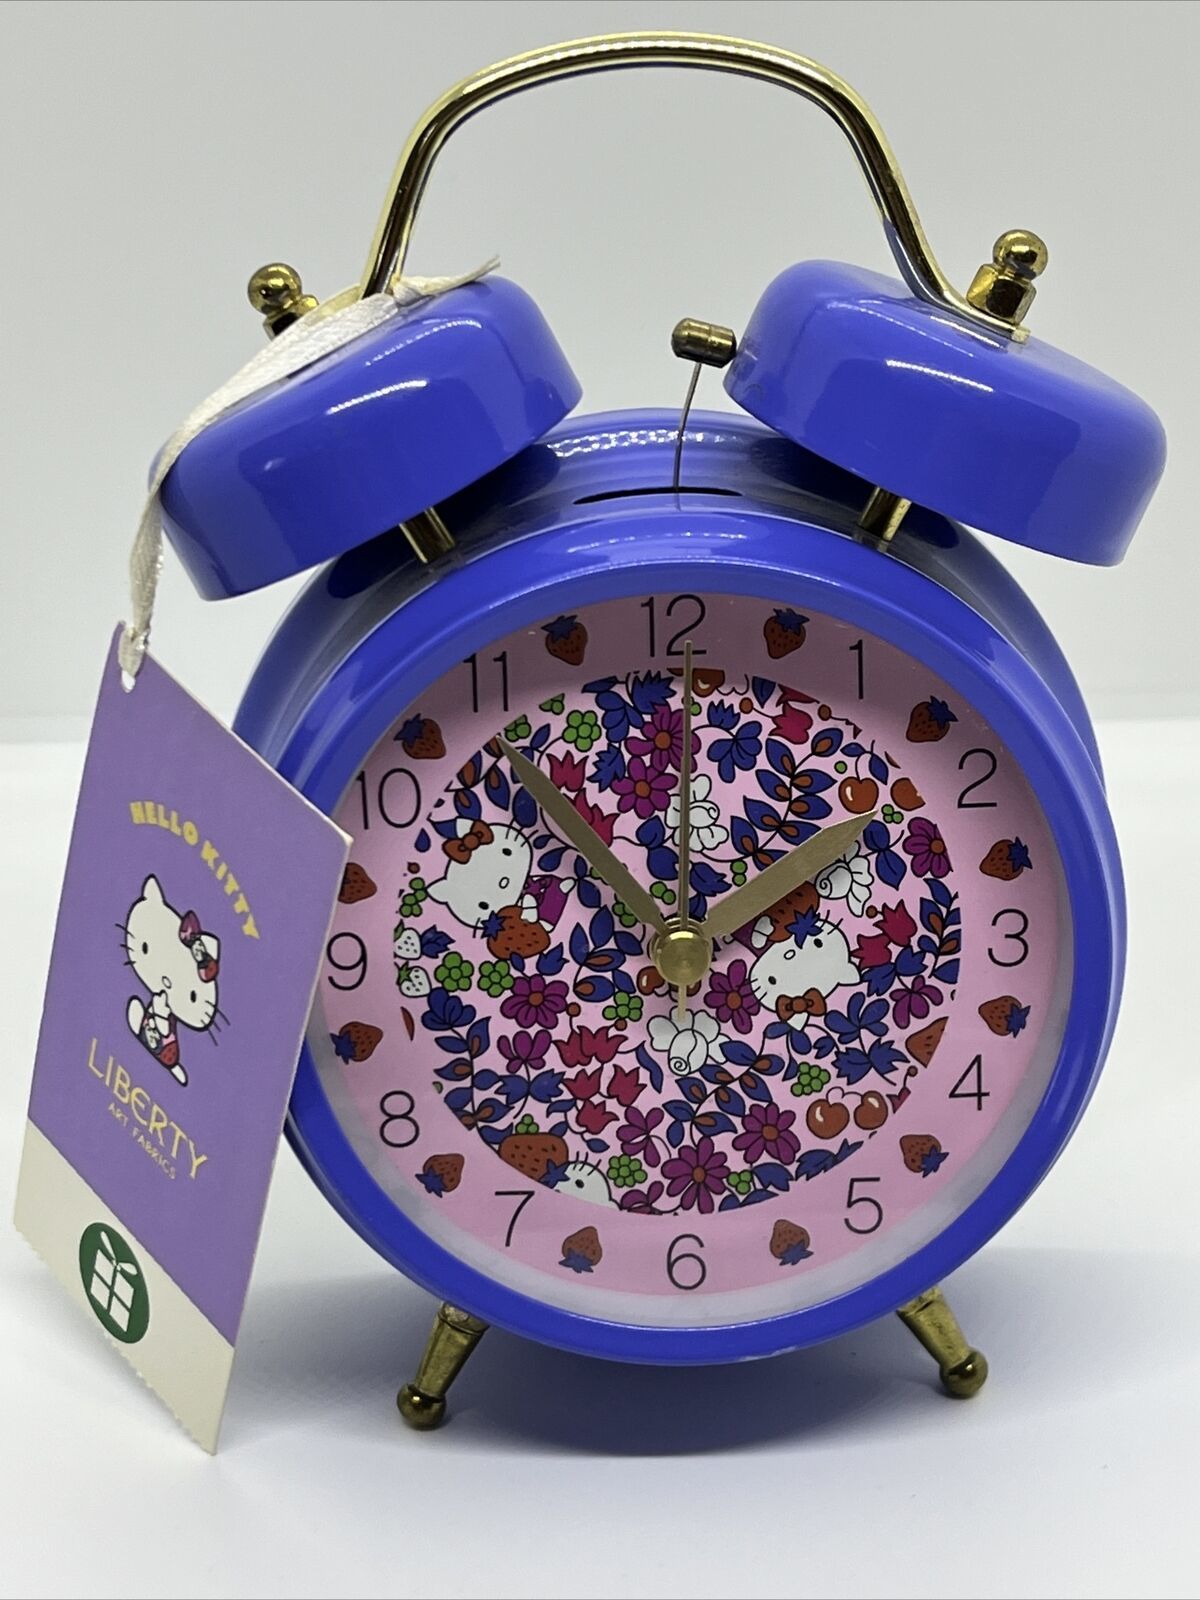 Best Buy: Hello Kitty AM/FM Alarm Clock Radio Pink KT2051B